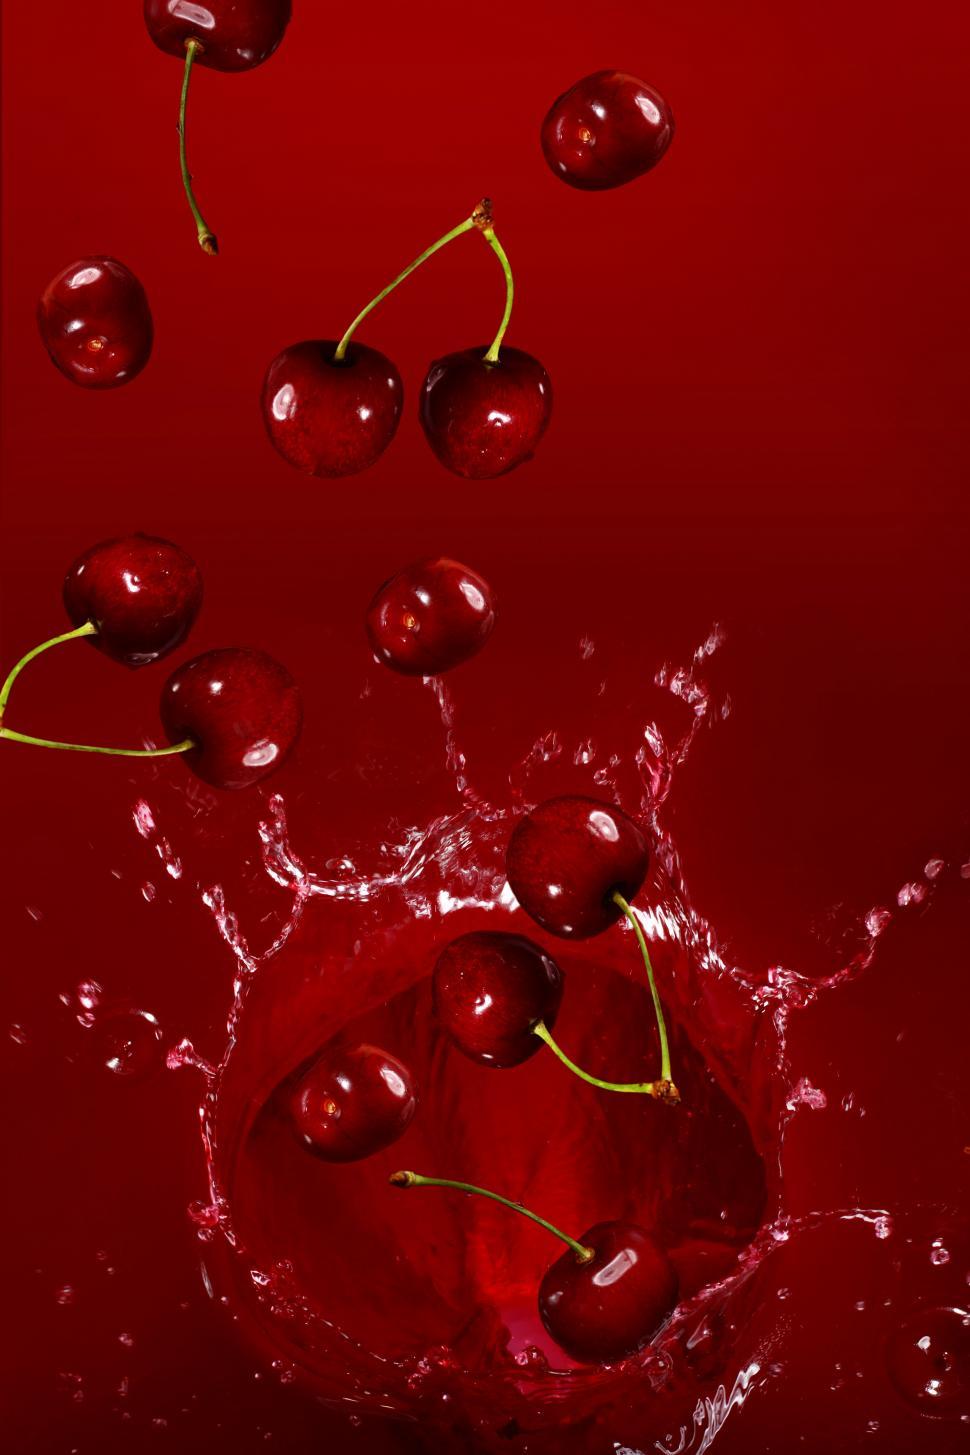 Free Image of Cherries falling into a splash of juice 